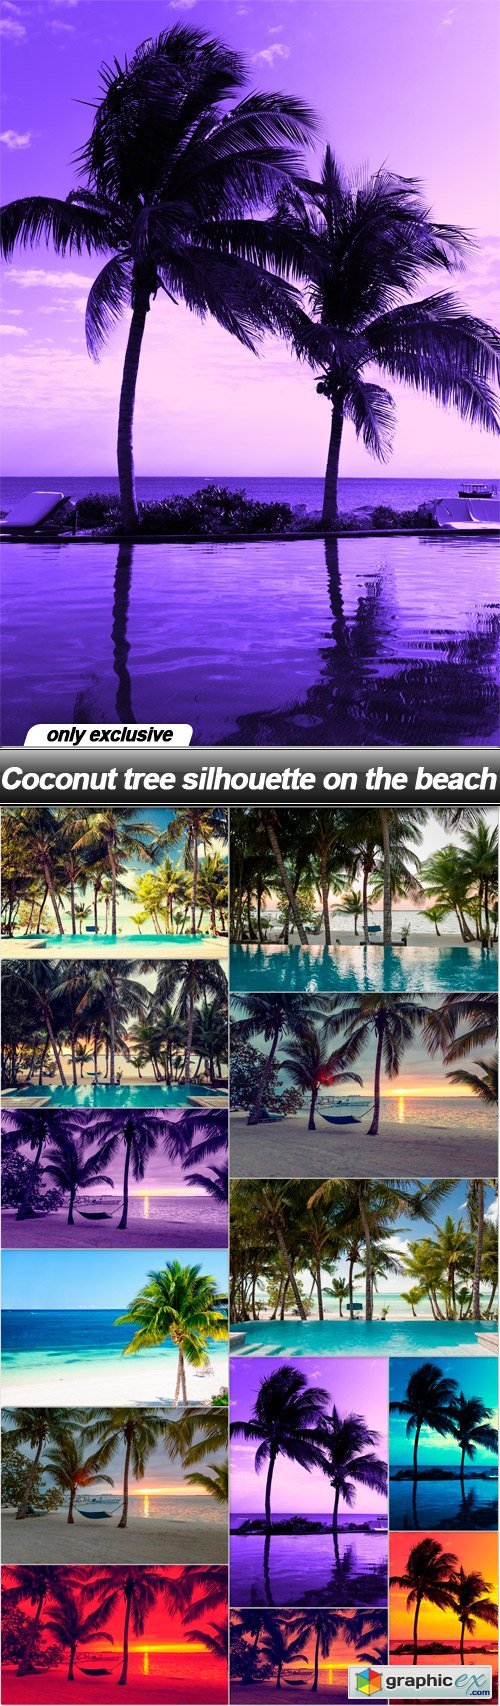 Coconut tree silhouette on the beach - 13 UHQ JPEG